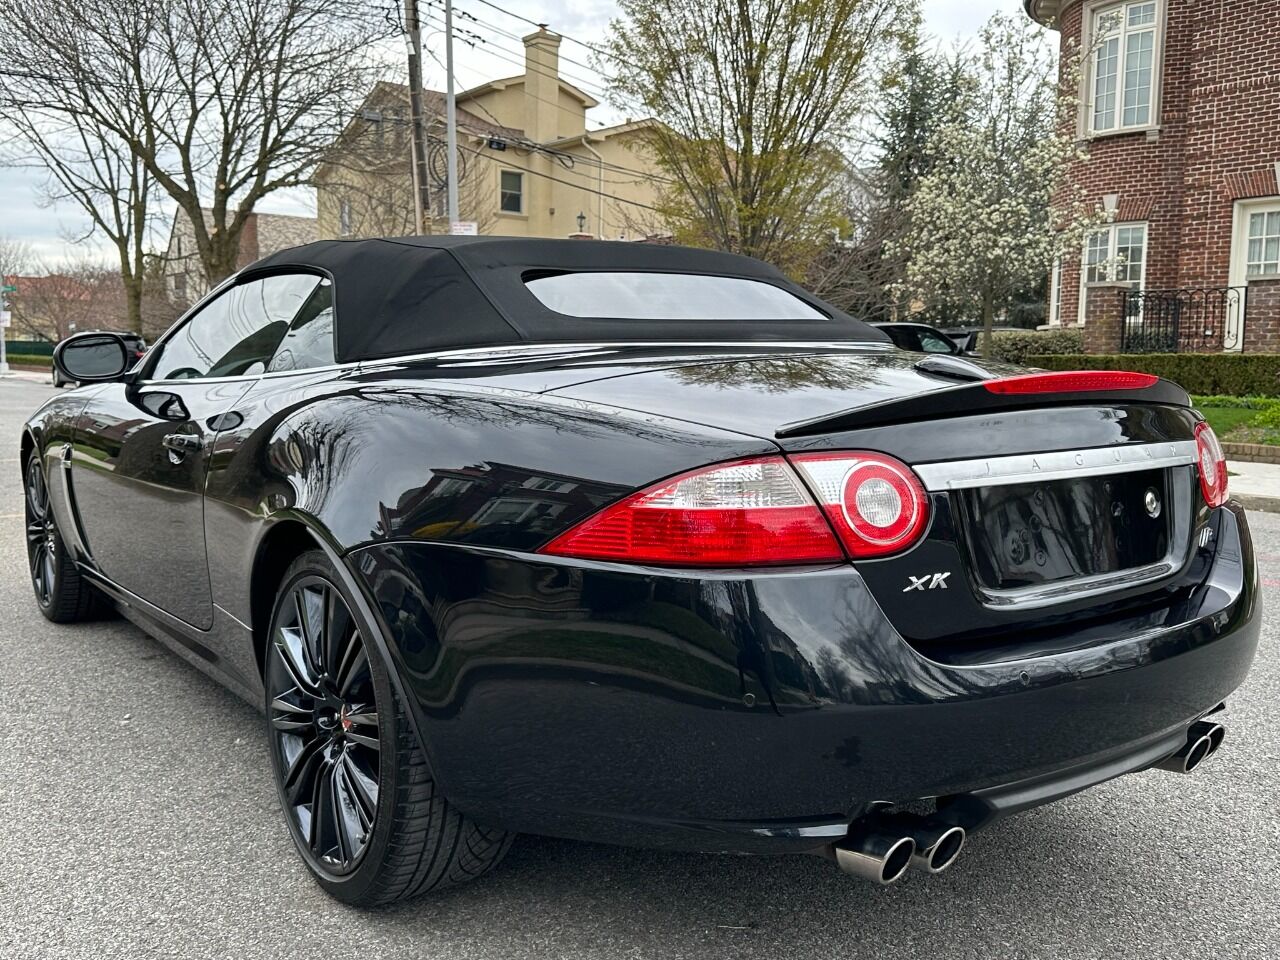 2009 Jaguar XK Convertible - $25,900